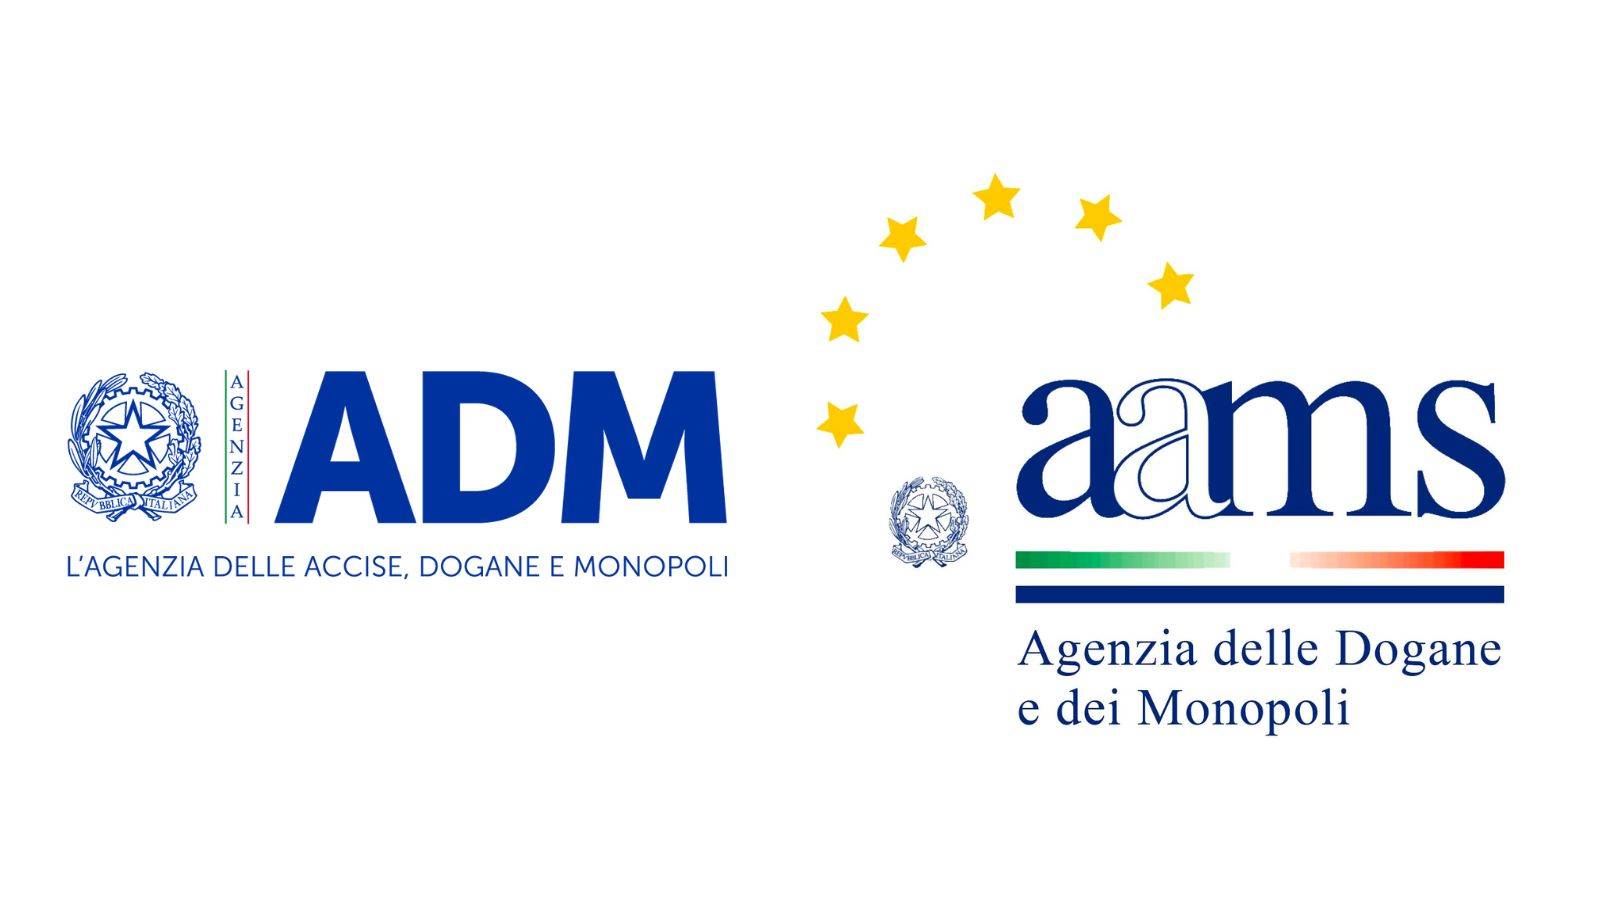 ADM AAMS logo